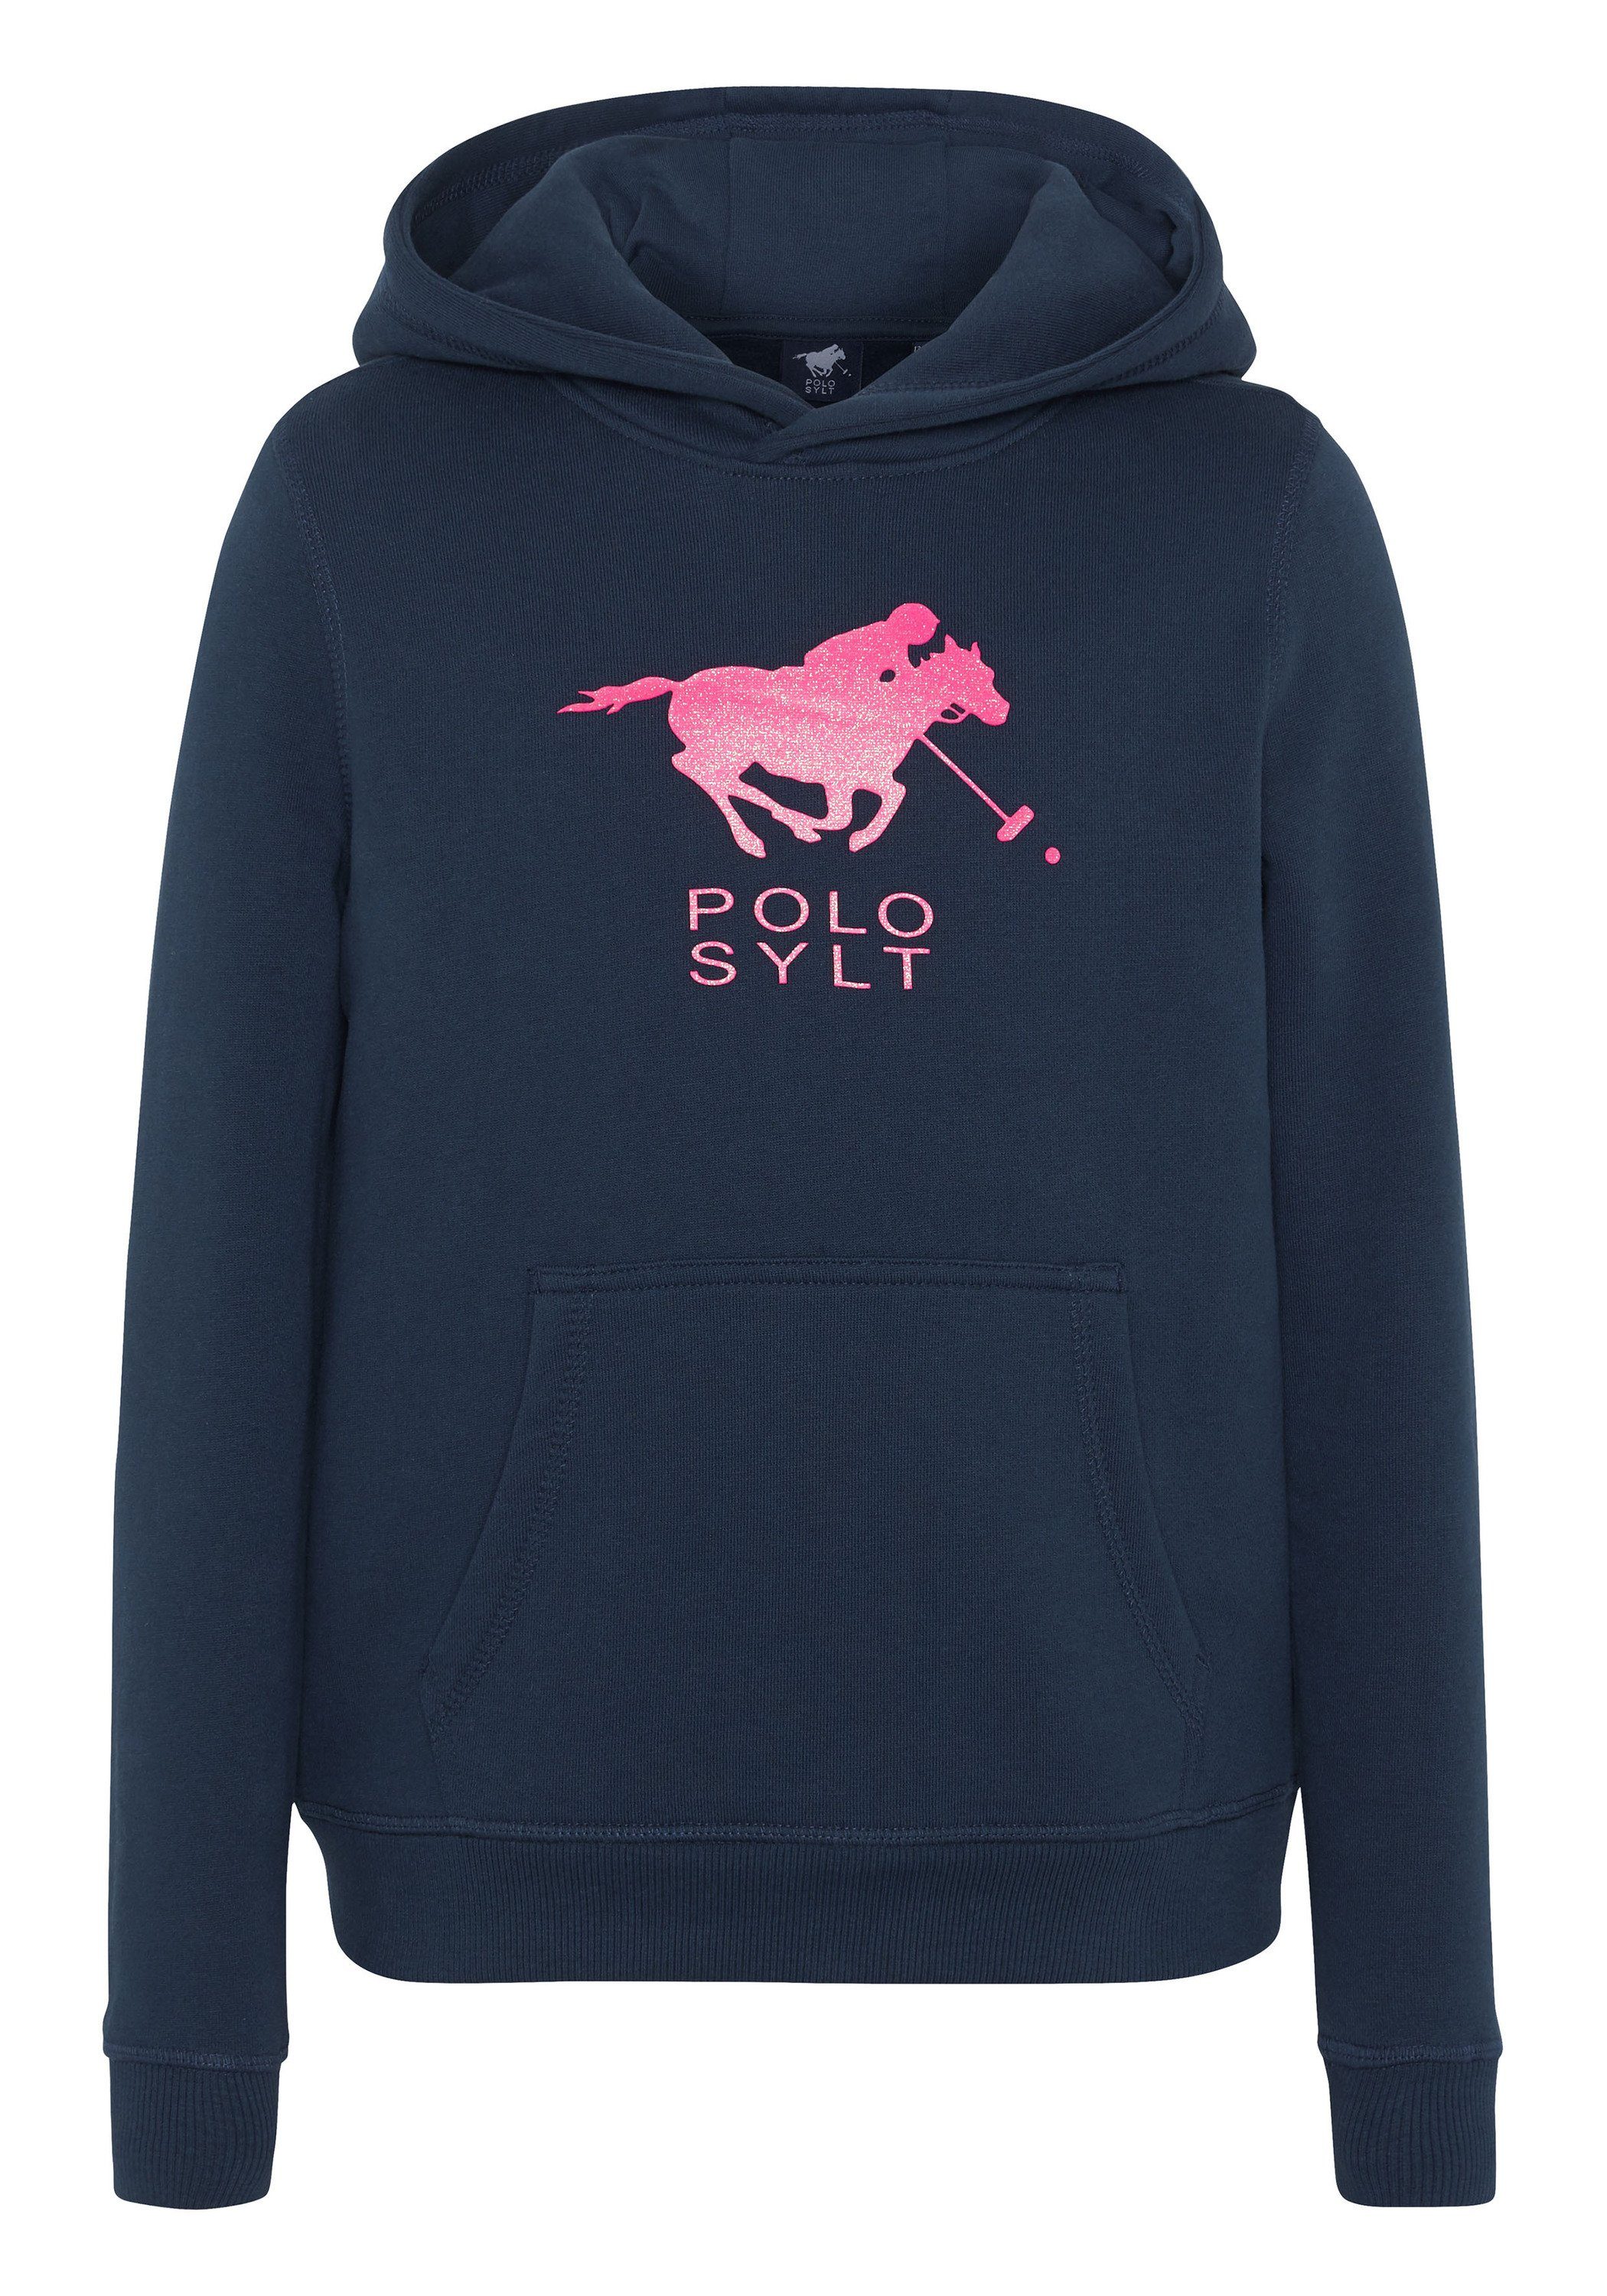 Total Label-Motiv Sweatshirt Eclipse Polo Sylt mit glitzerndem